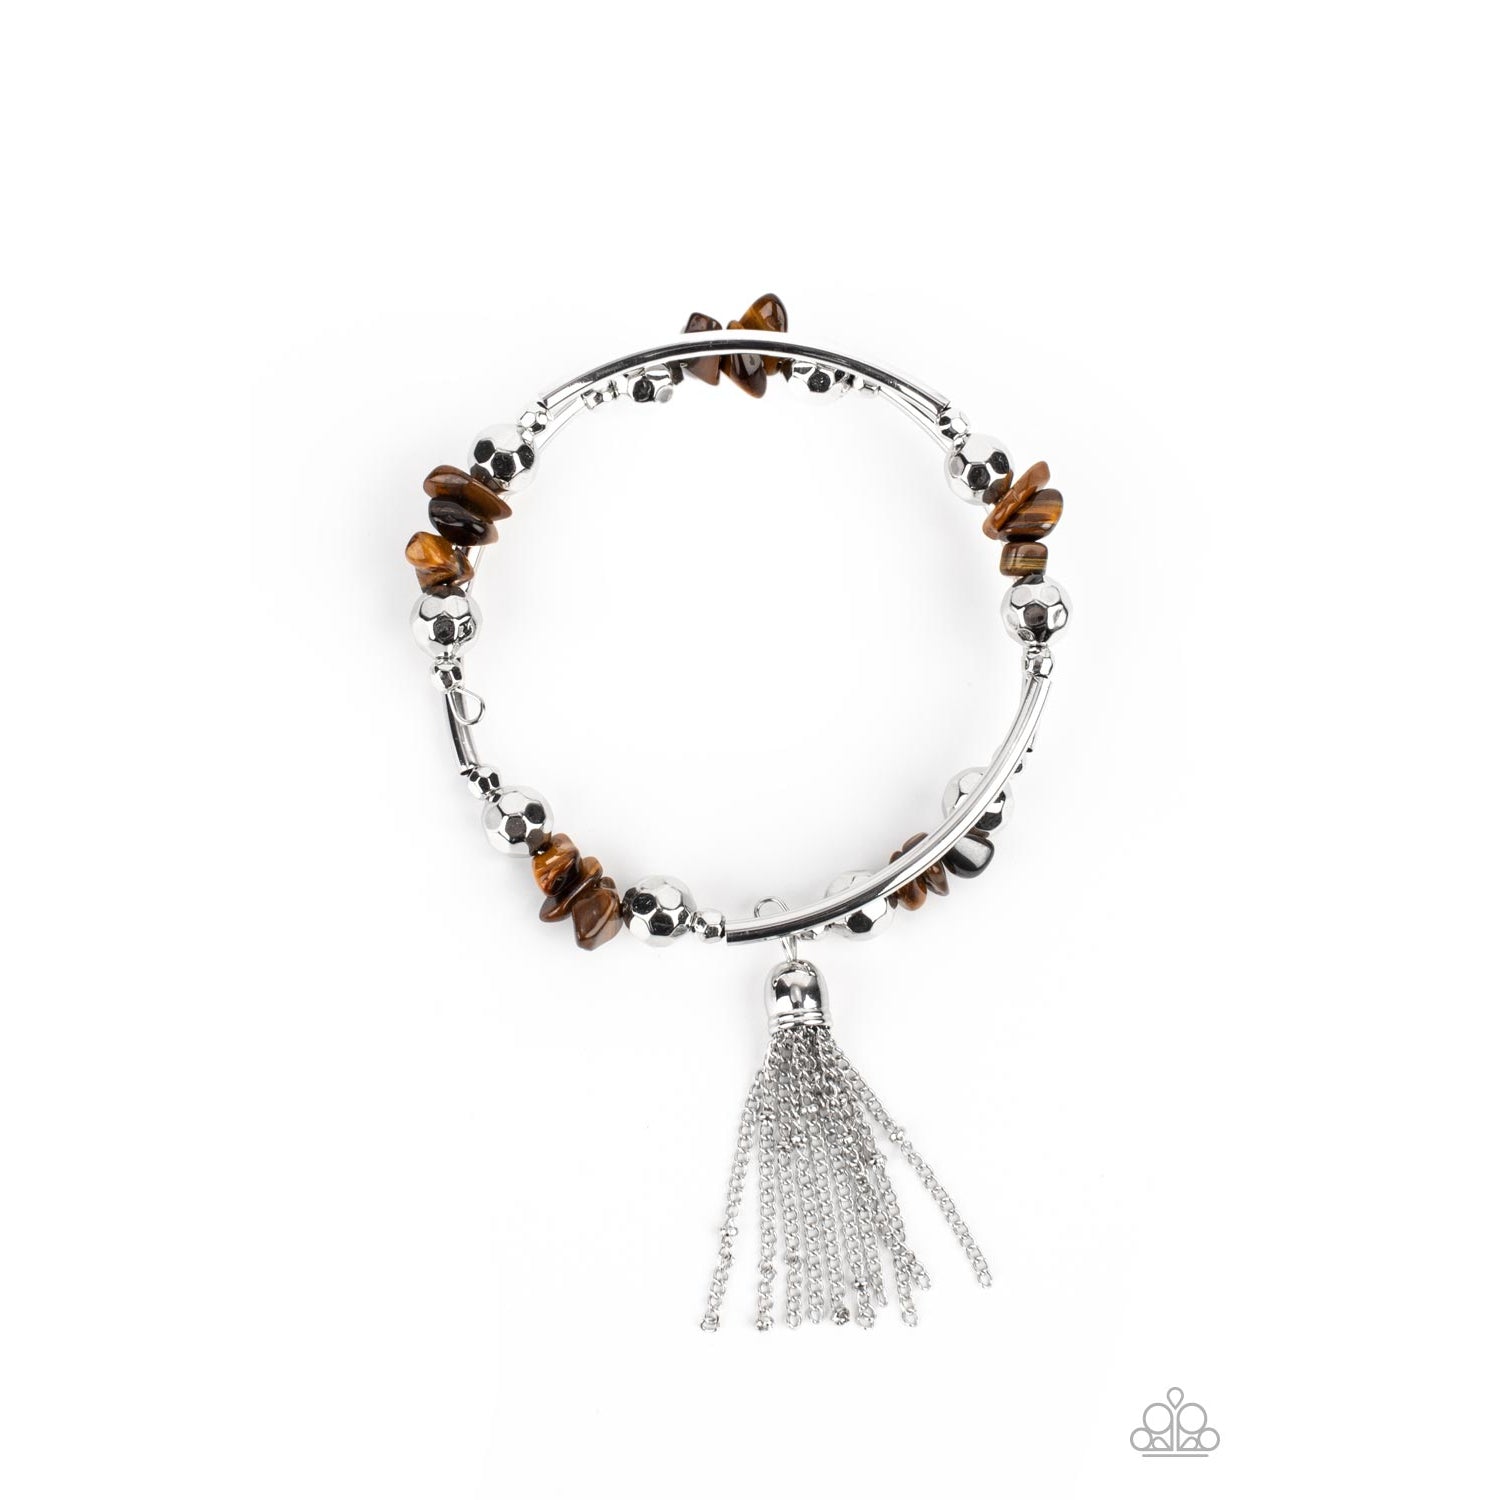 Mineral Mosaic - Brown Tiger's Eye Bead Bracelet - Paparazzi Accessories - GlaMarous Titi Jewels